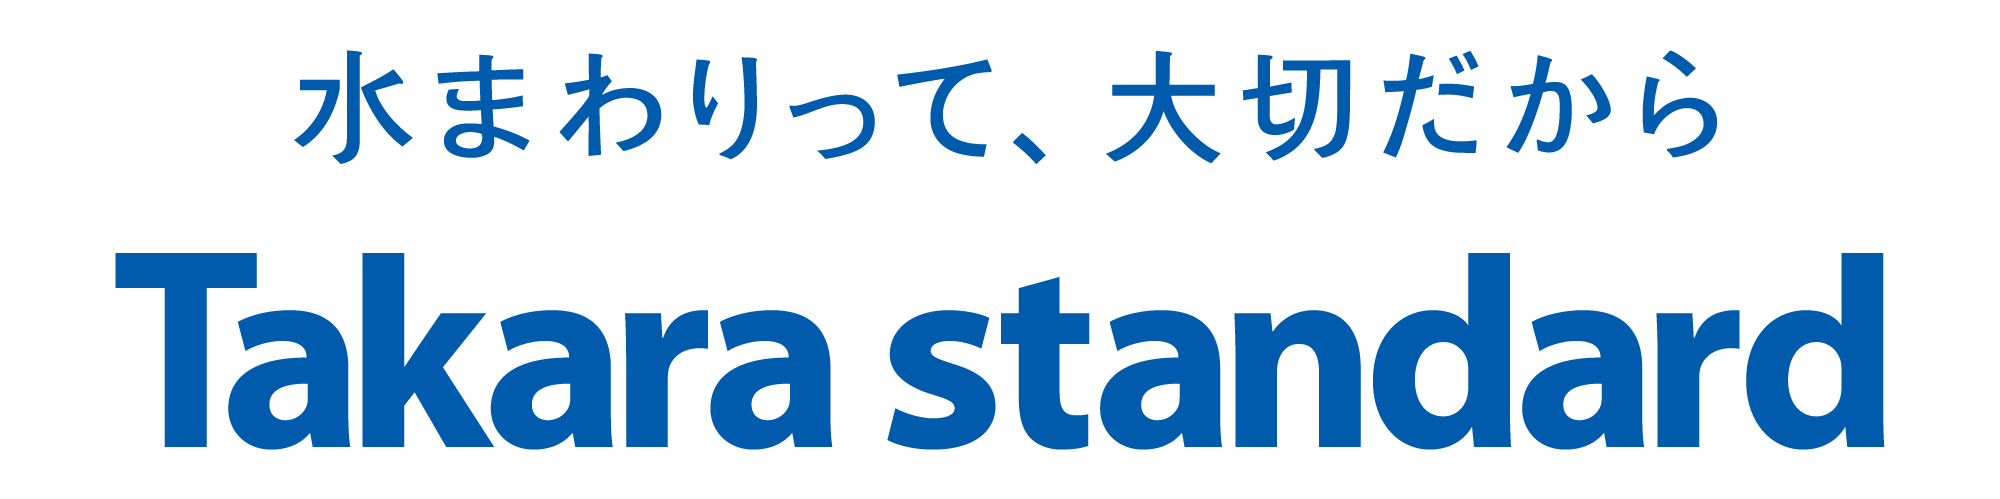 takara_slogan